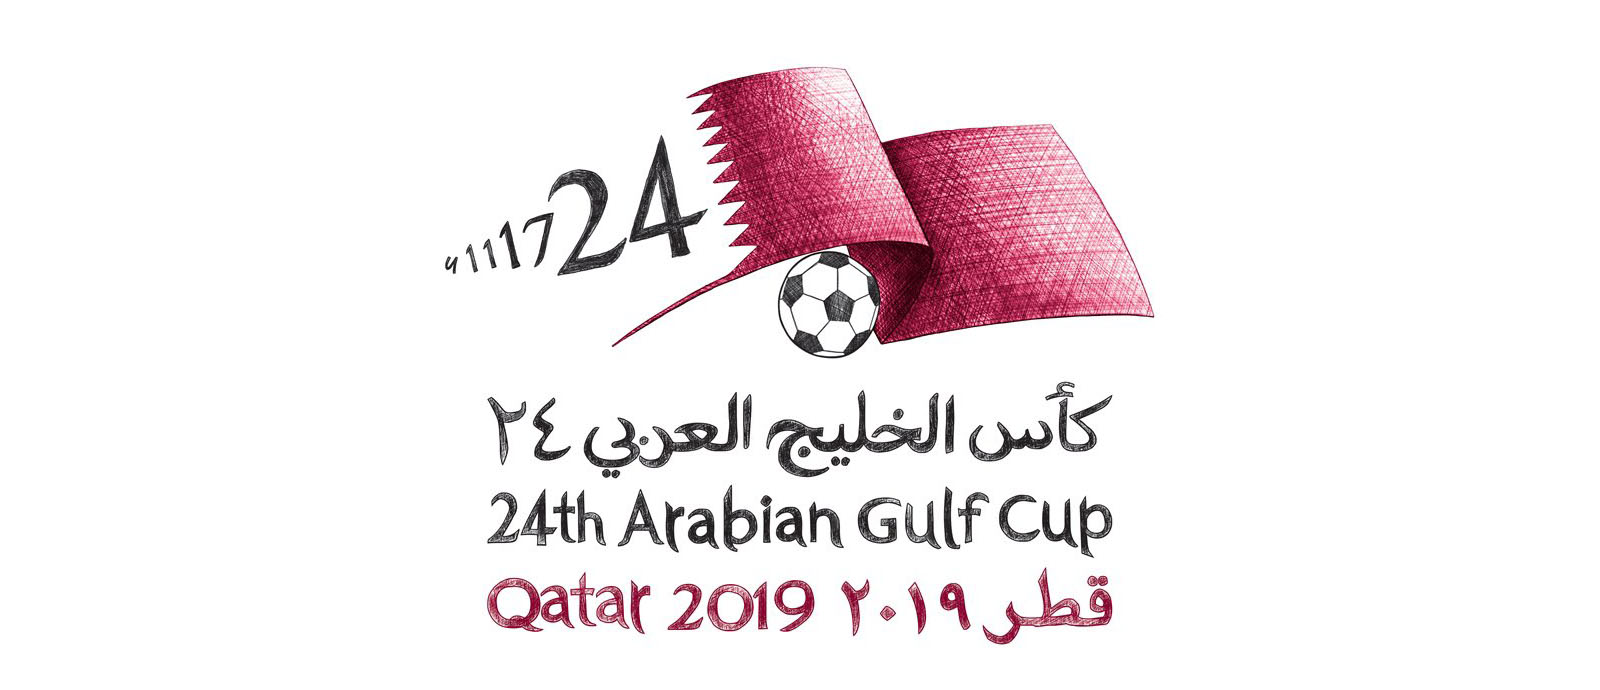 The 24th Arabian Gulf Cup's logo